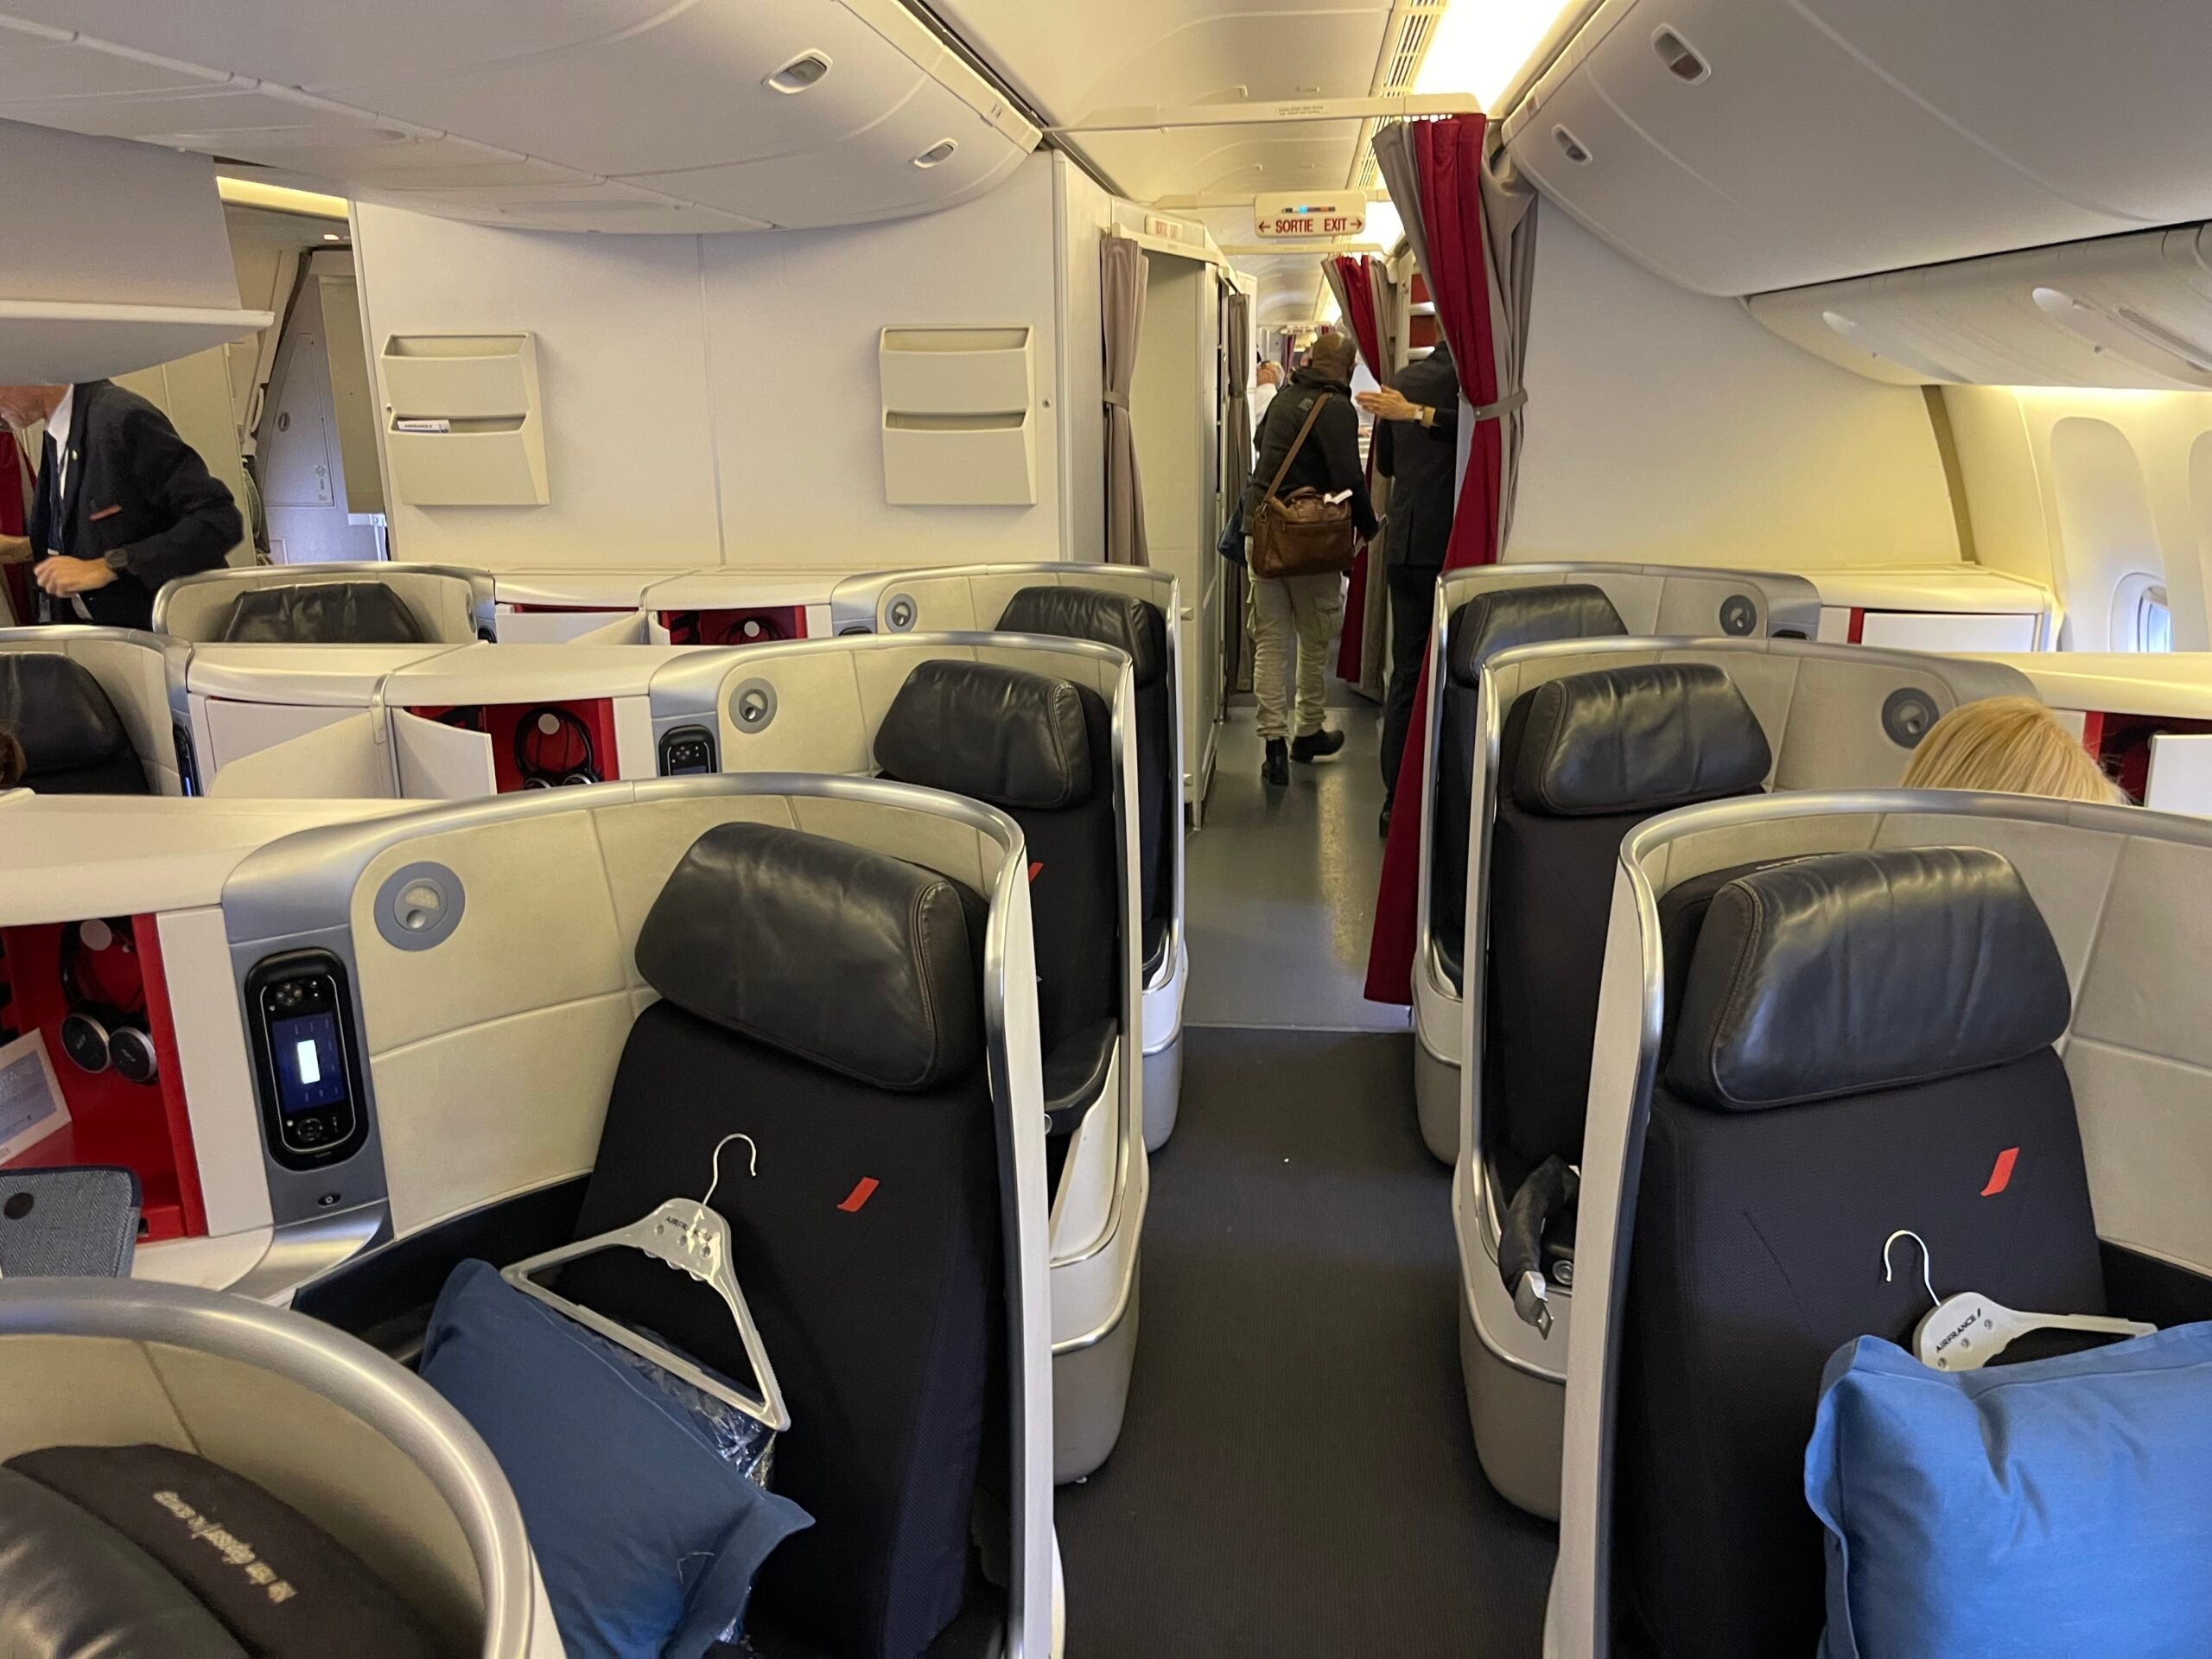 Air France Boeing 777-300ER business class cabin